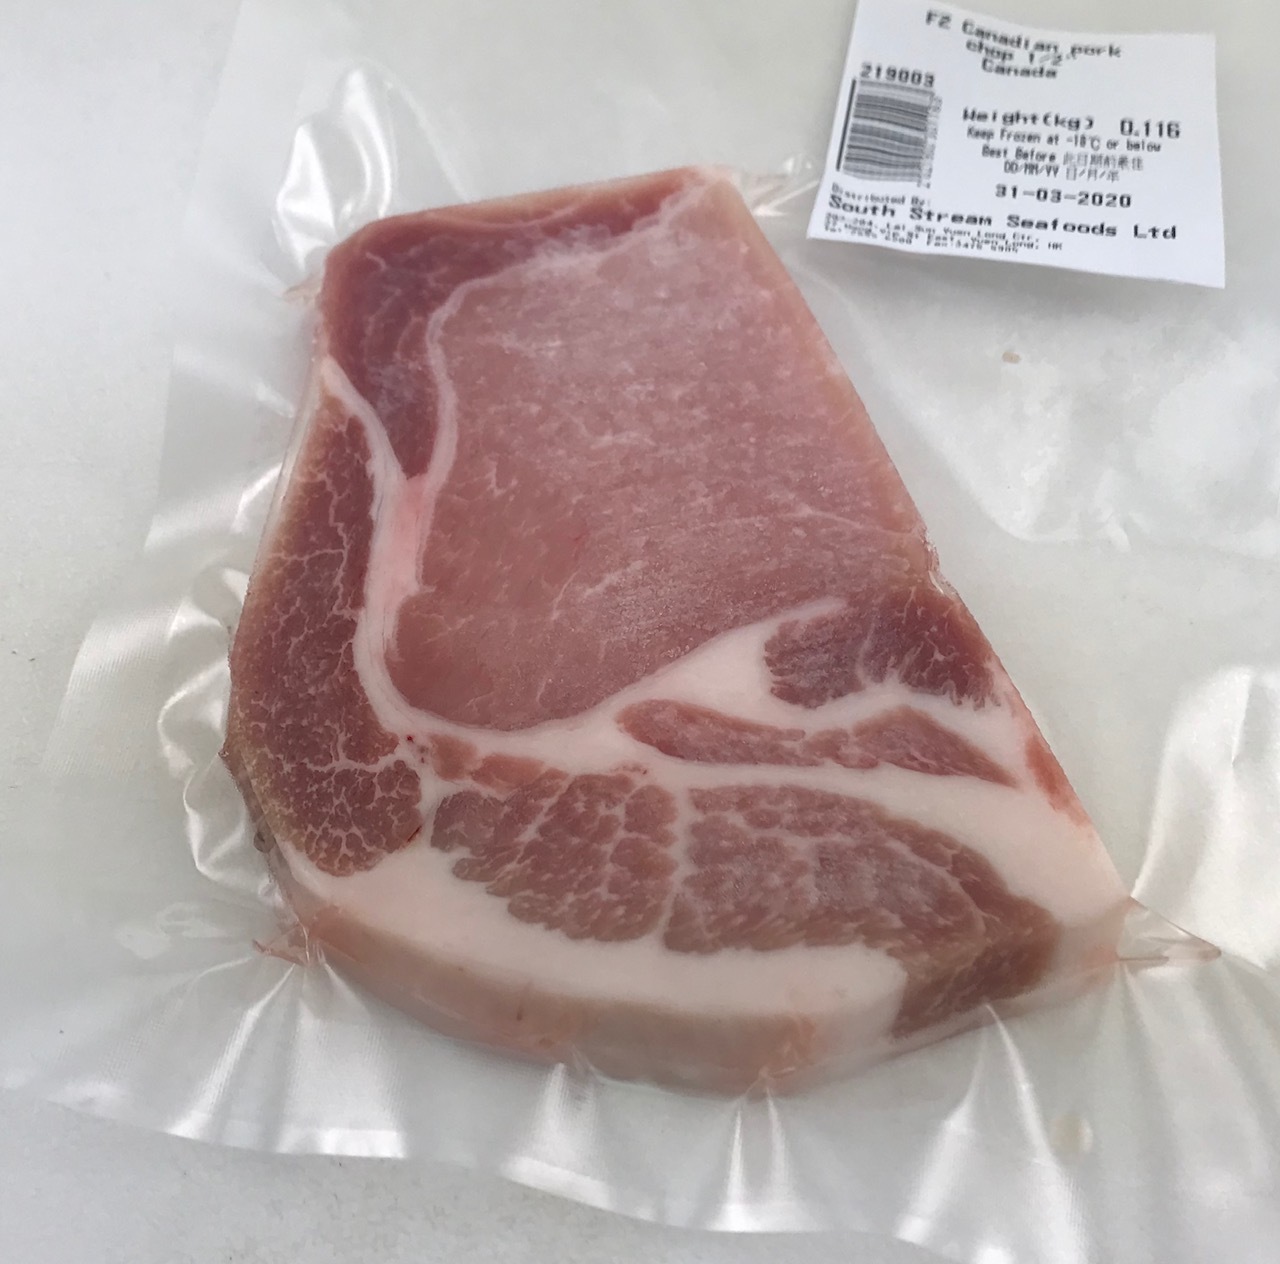 Frozen Canadian pork chop ½"